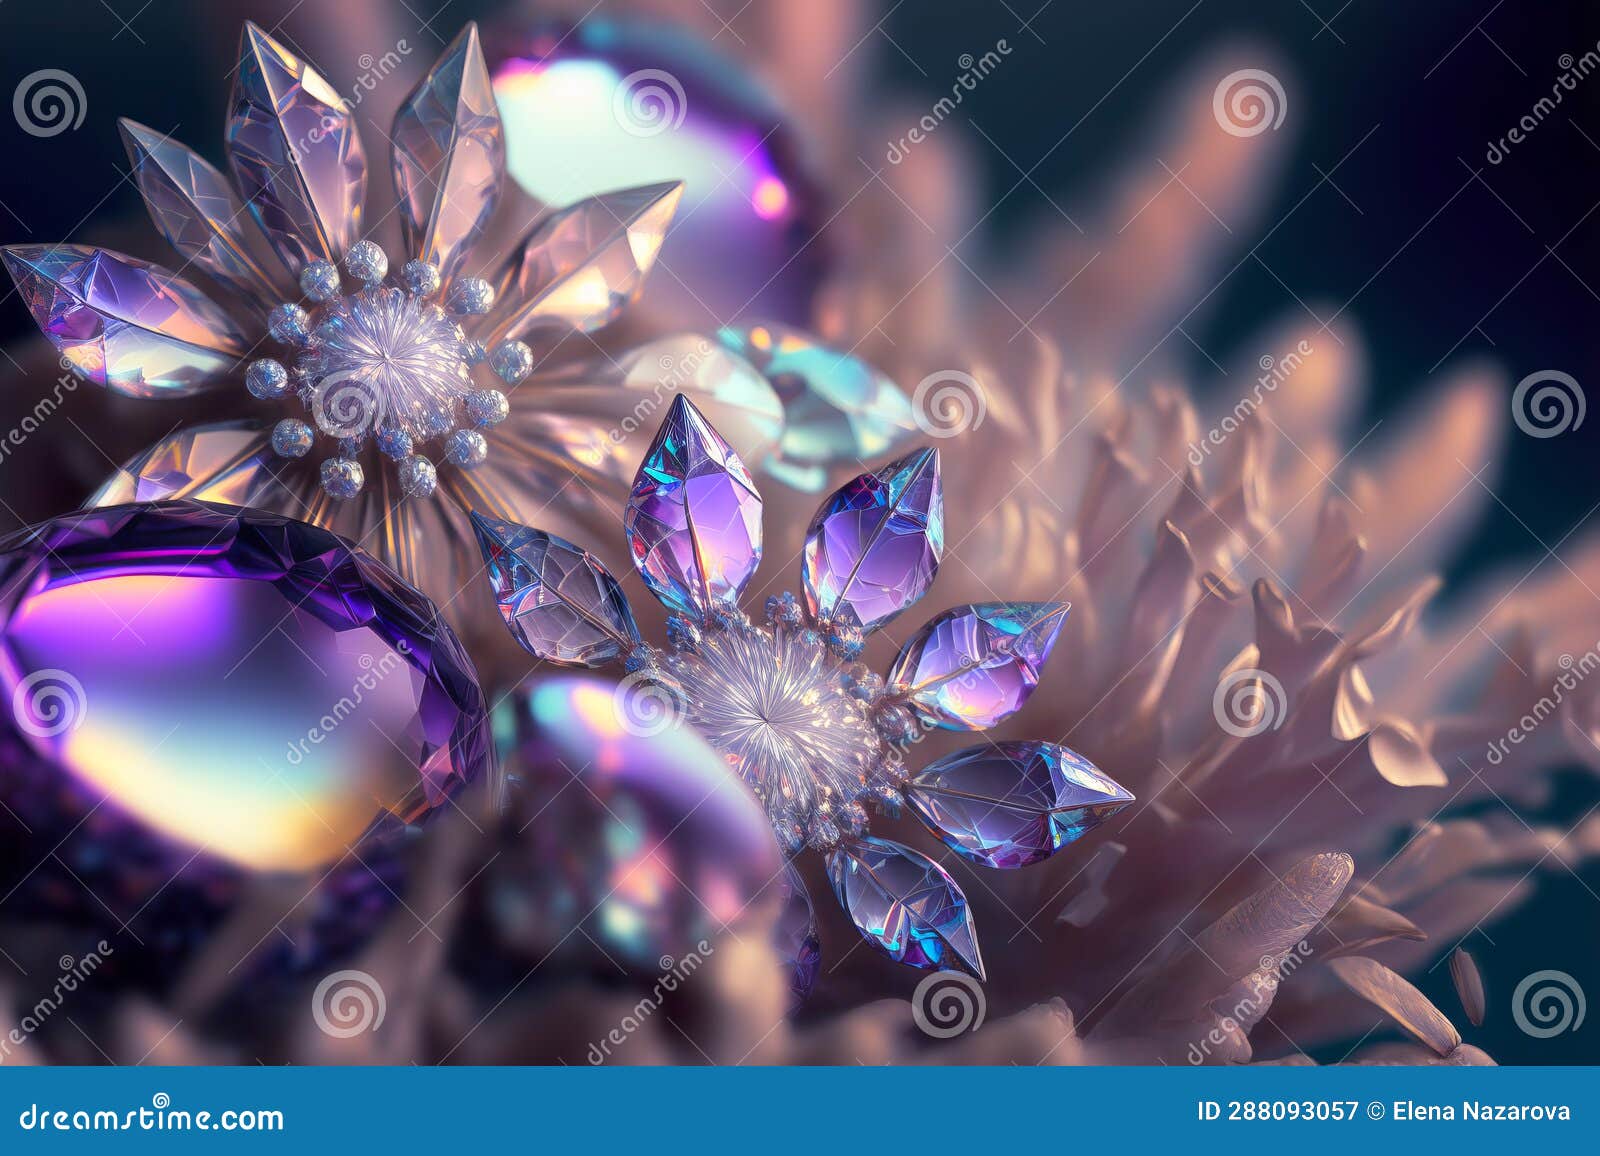 Amethyst Druze Crystal Flowers. Magic Fantastic Gemstone Flowers